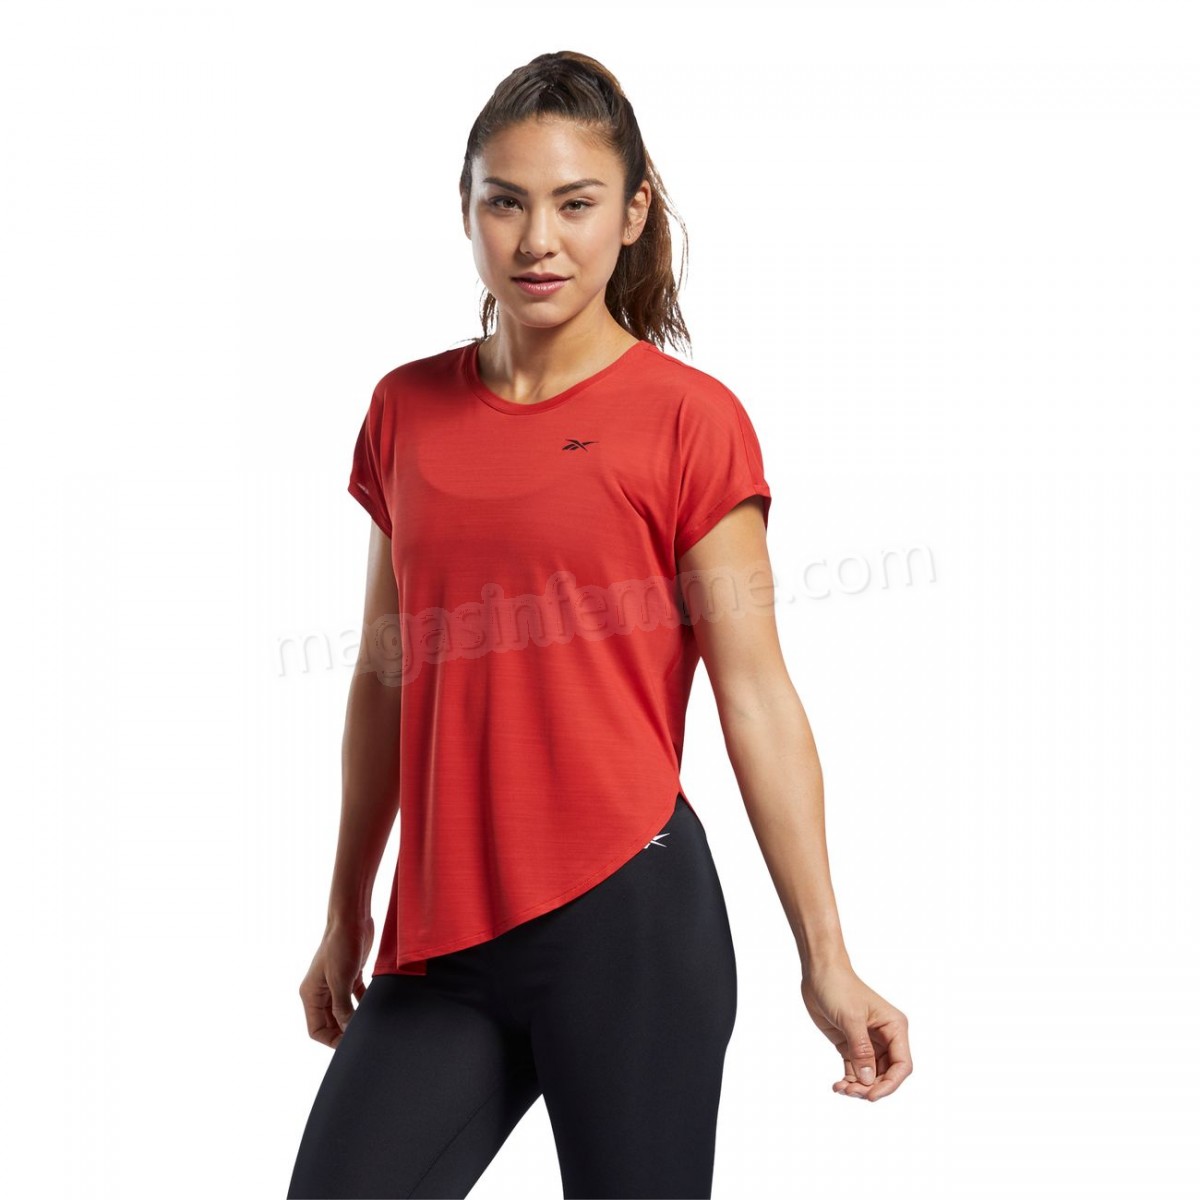 Reebok-Fitness femme REEBOK T-shirt femme Reebok Workout Ready ActivChill en solde - -2